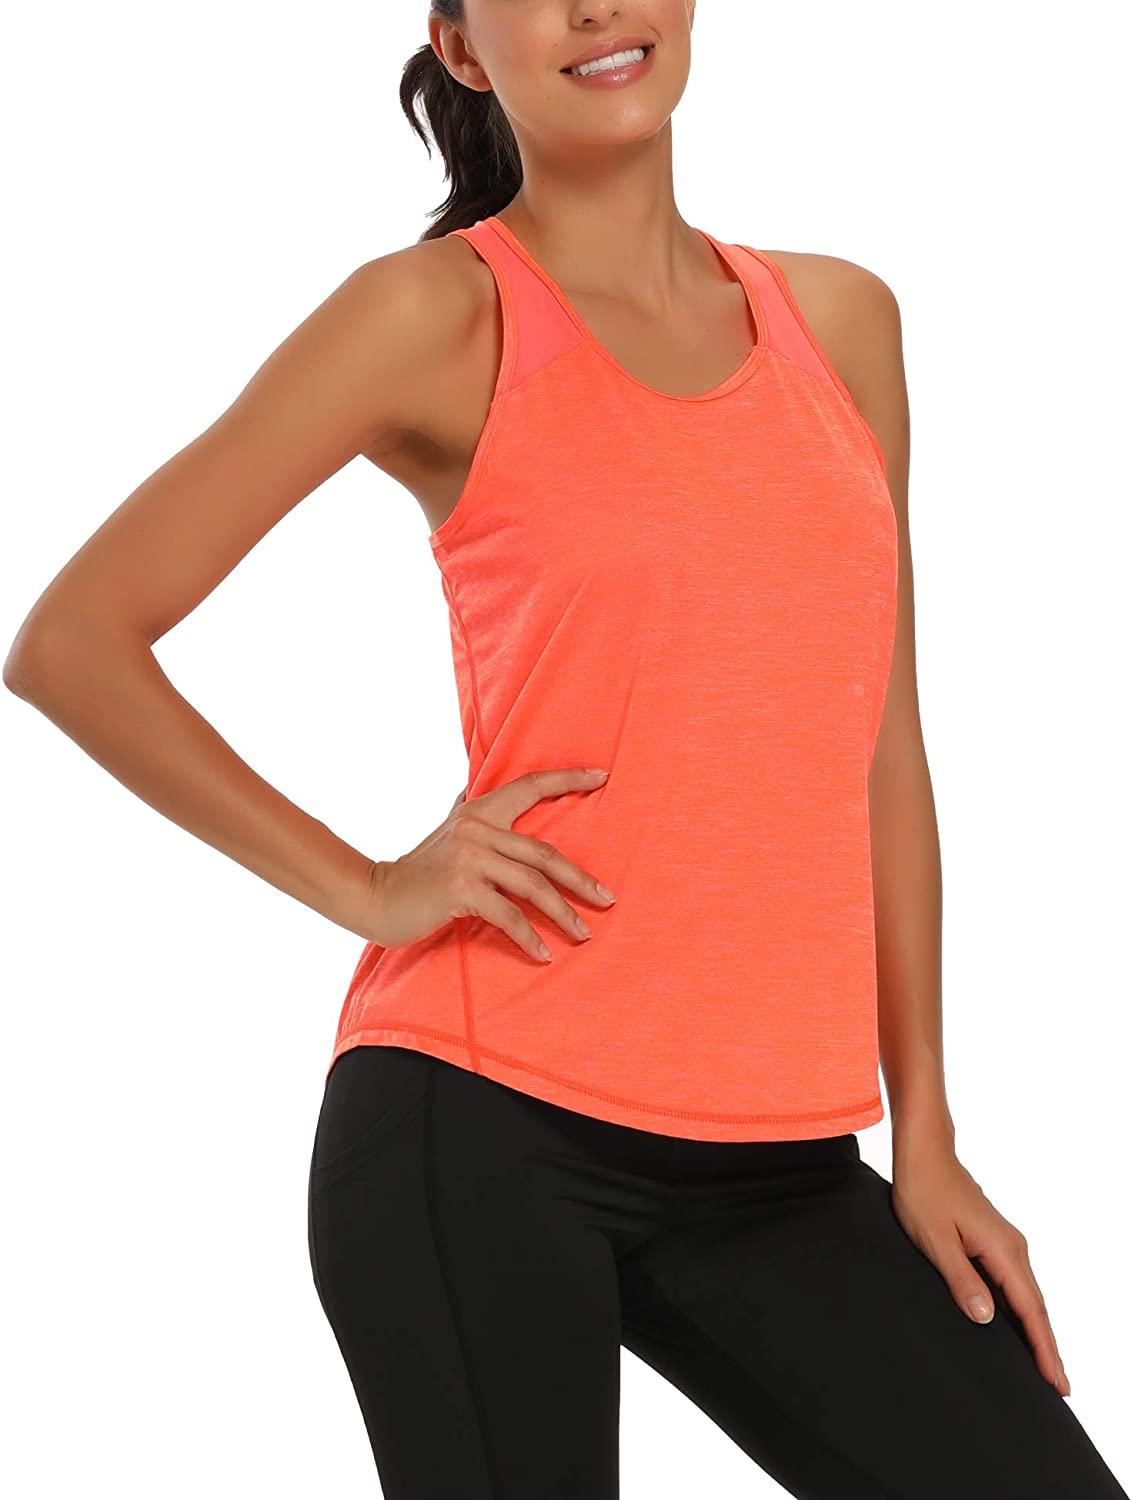 ADREAMLY Workout Tank Top Sleeveless Sports Shirt Loose Crop Tops